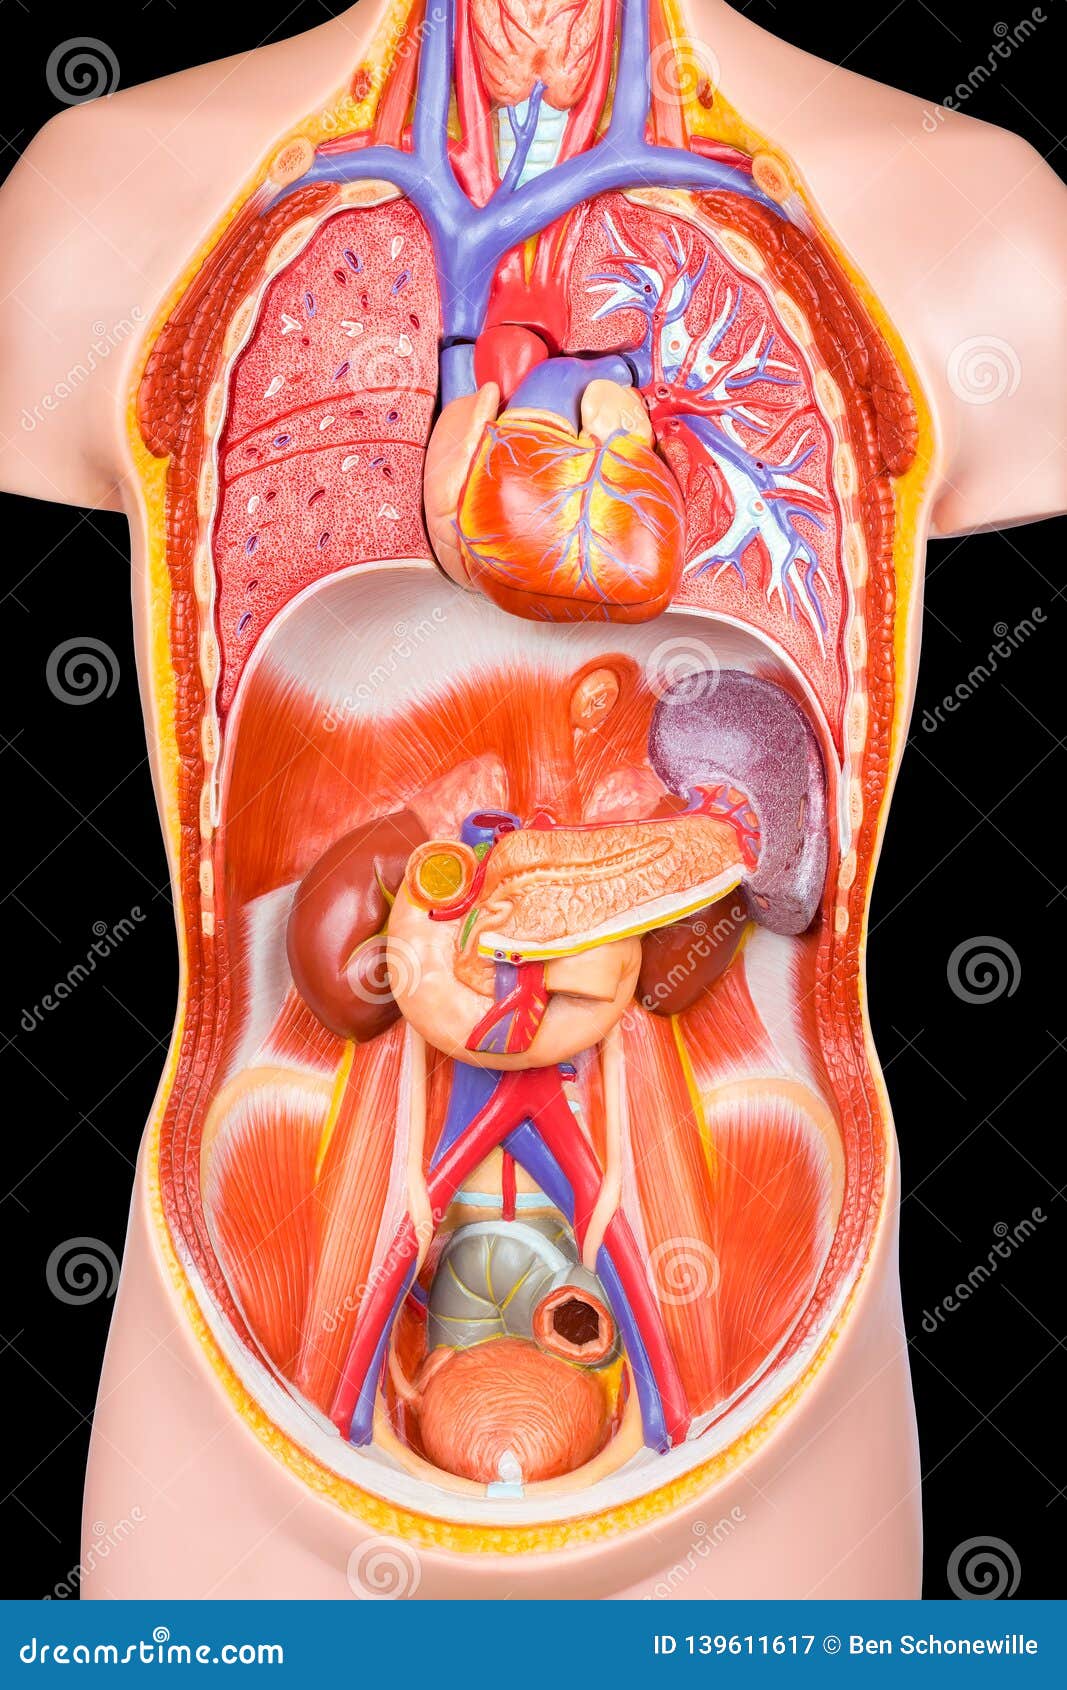 Human Torso Model With Internal Organs On Black Background ...